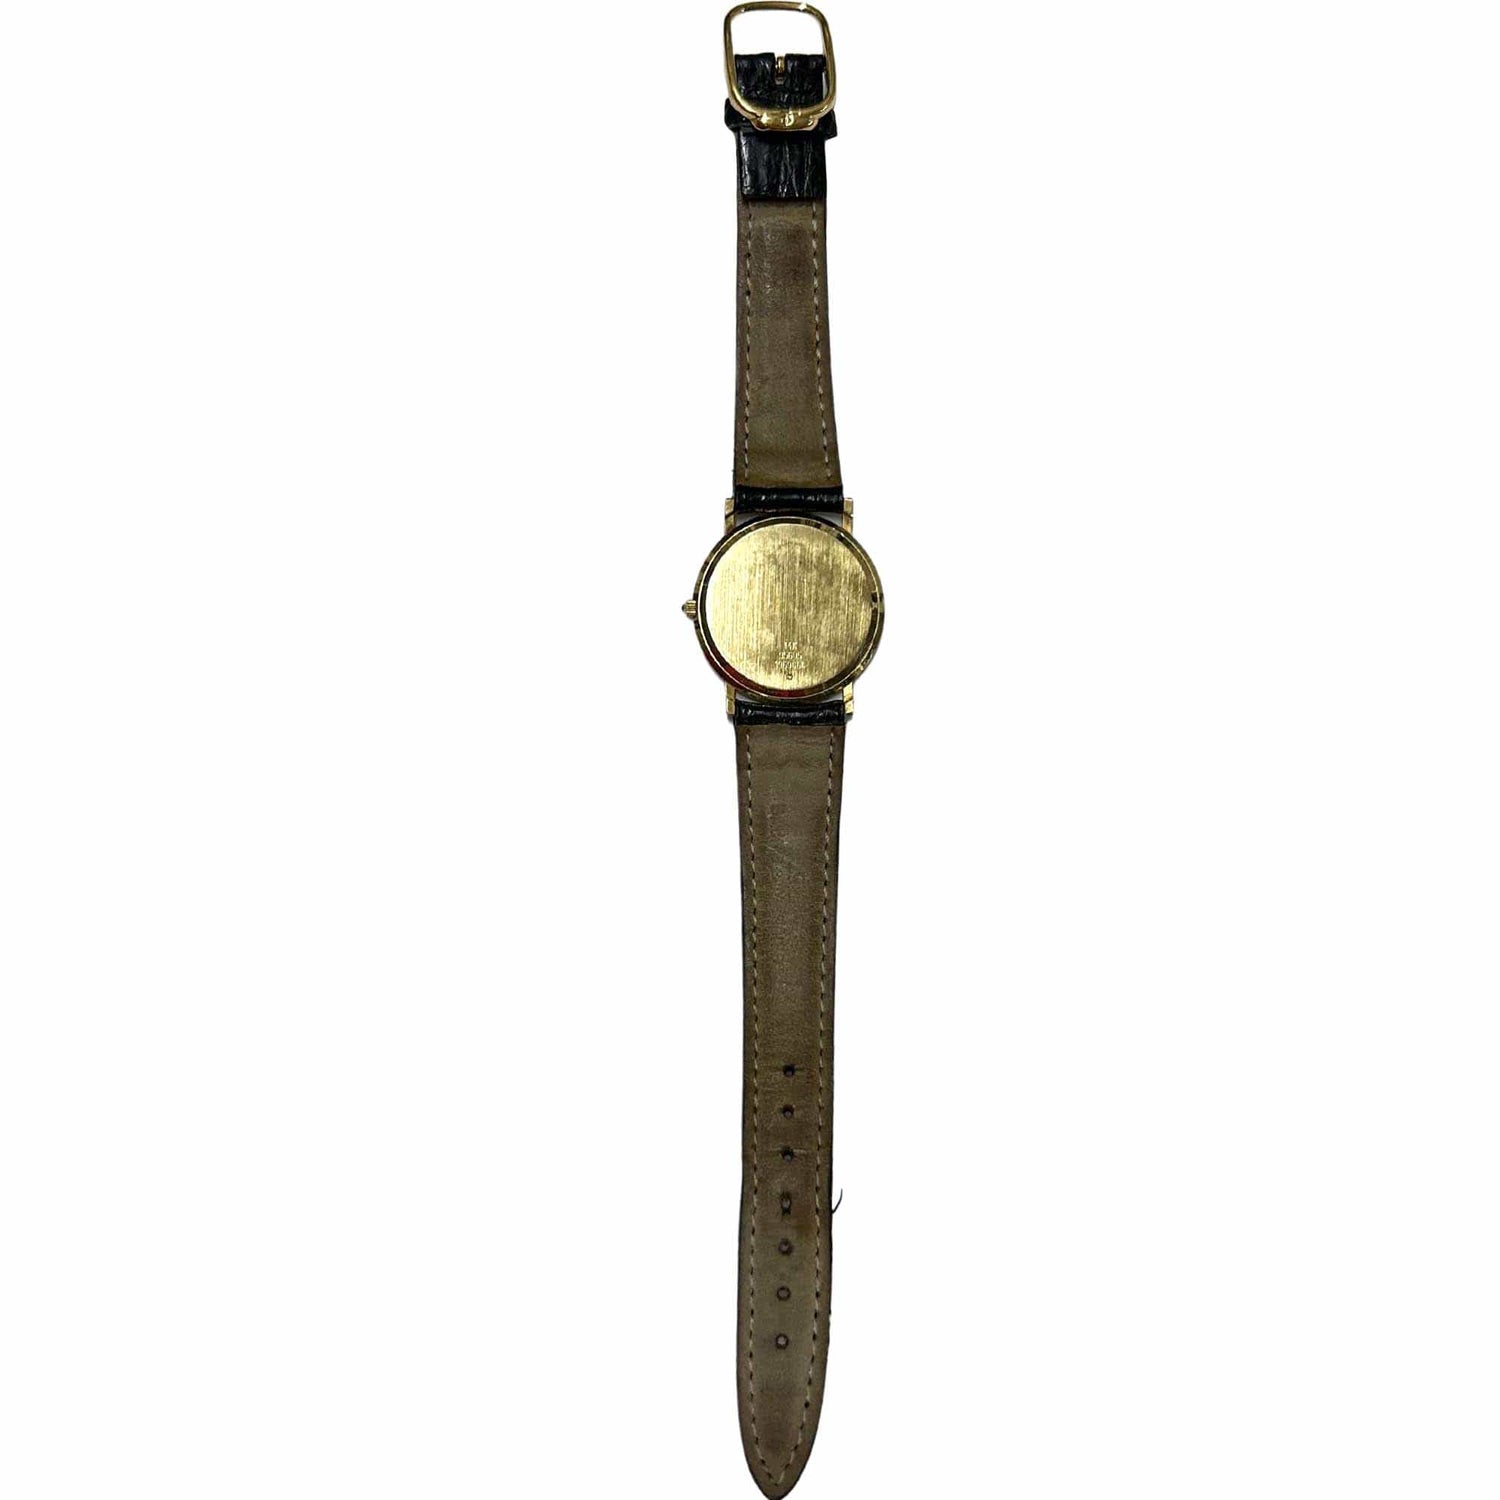 14k Baume Mercier Wristwatch Reverse View